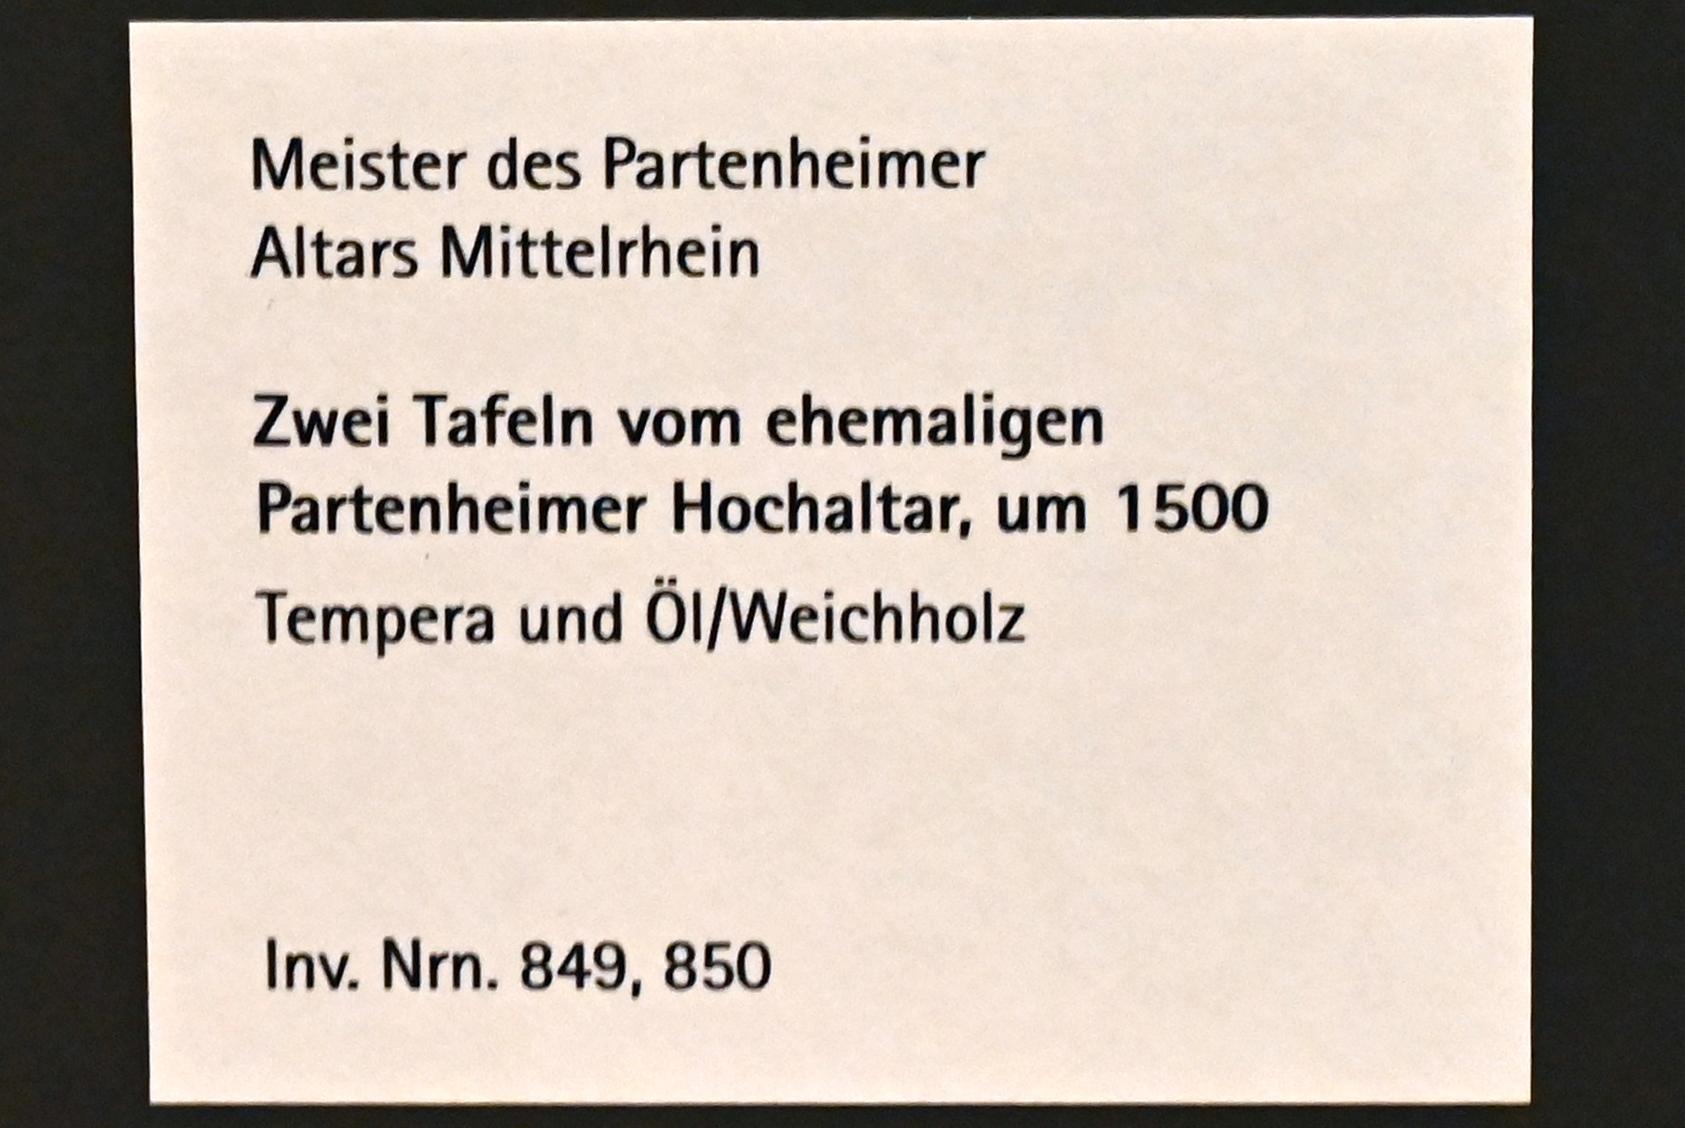 Meister des Partenheimer Altars (1500), Jesus rettet den sinkenden Petrus, Partenheim, Pfarrkirche Mariä Himmelfahrt, jetzt Mainz, Landesmuseum, Schaudepot, um 1500, Bild 2/2